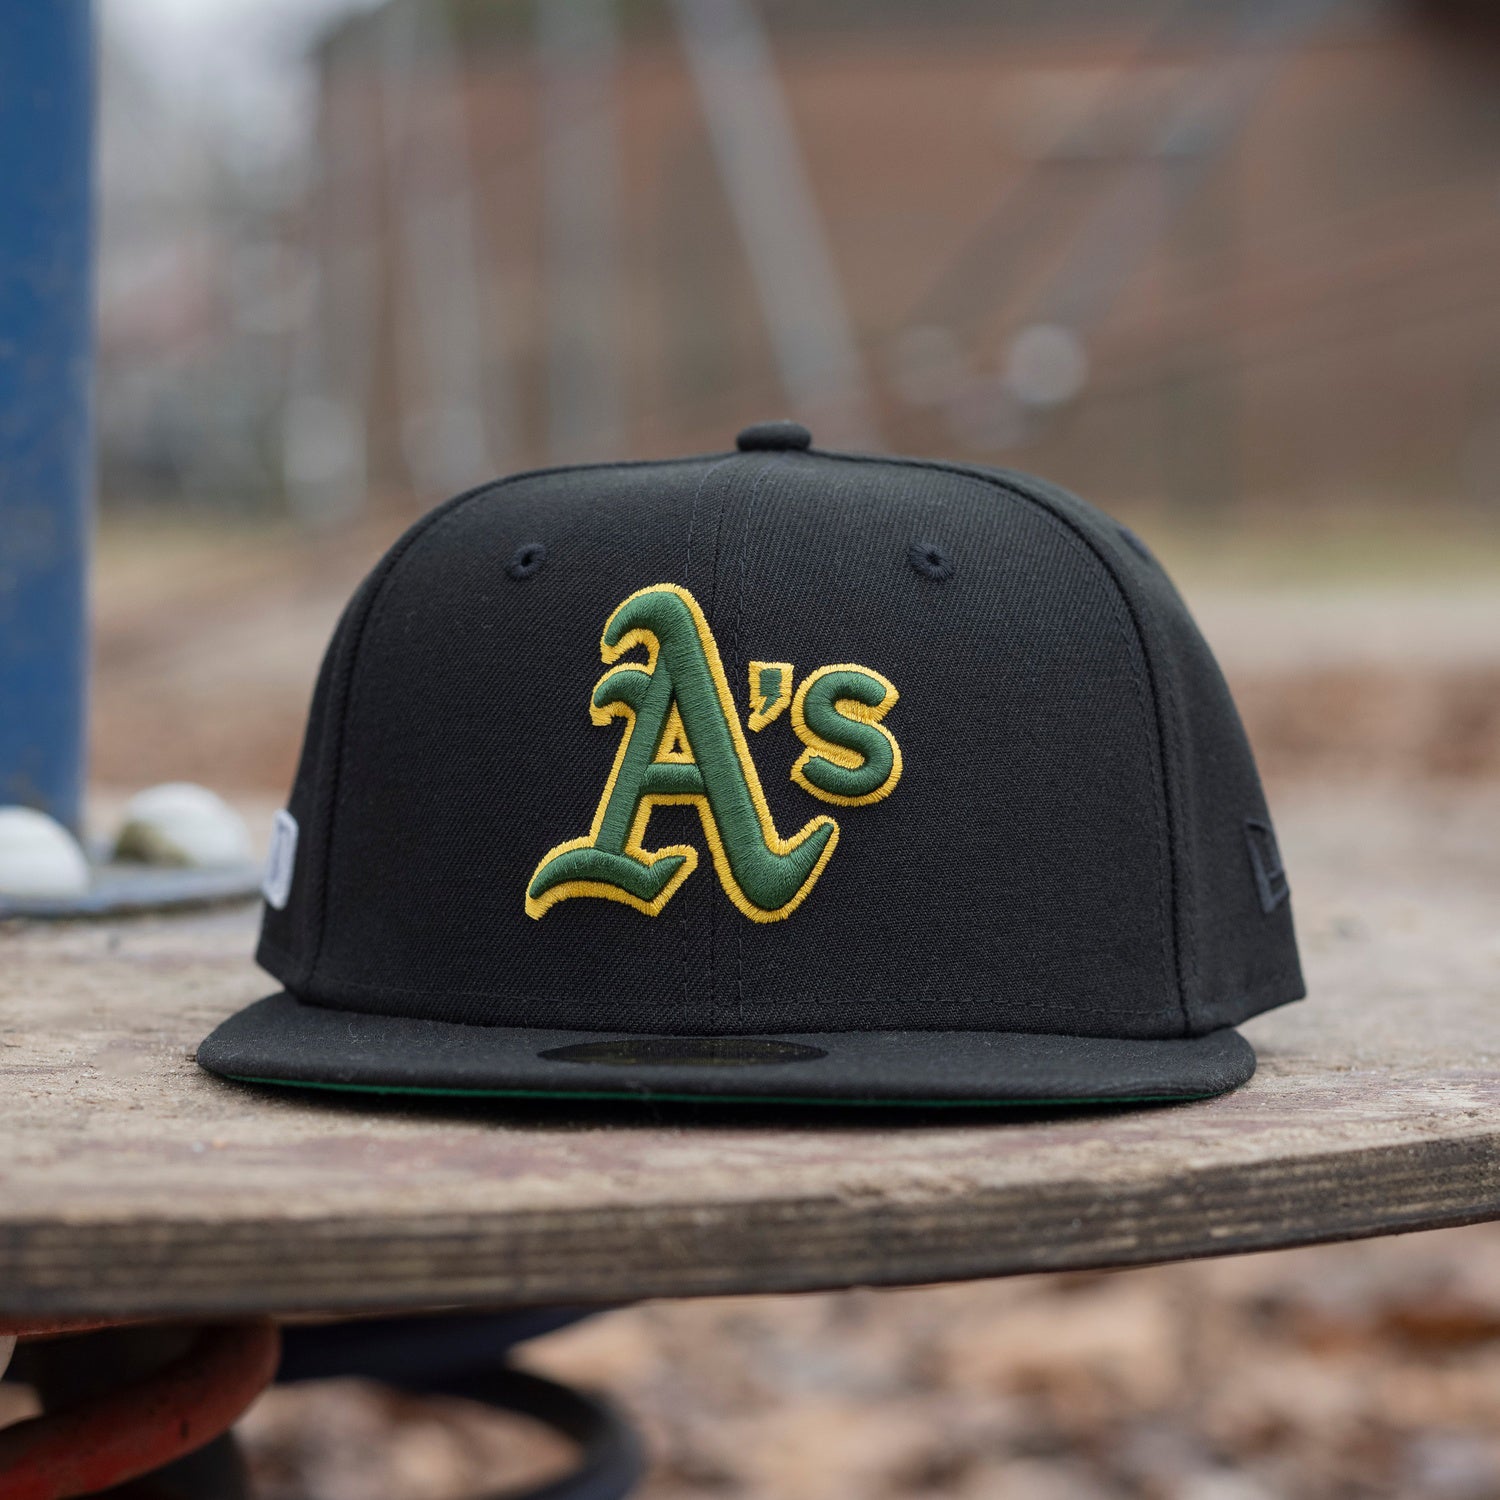 NEW ERA 59FIFTY MLB OAKLAND ATHLETICS BLACK / KELLY GREEN UV FITTED CAP